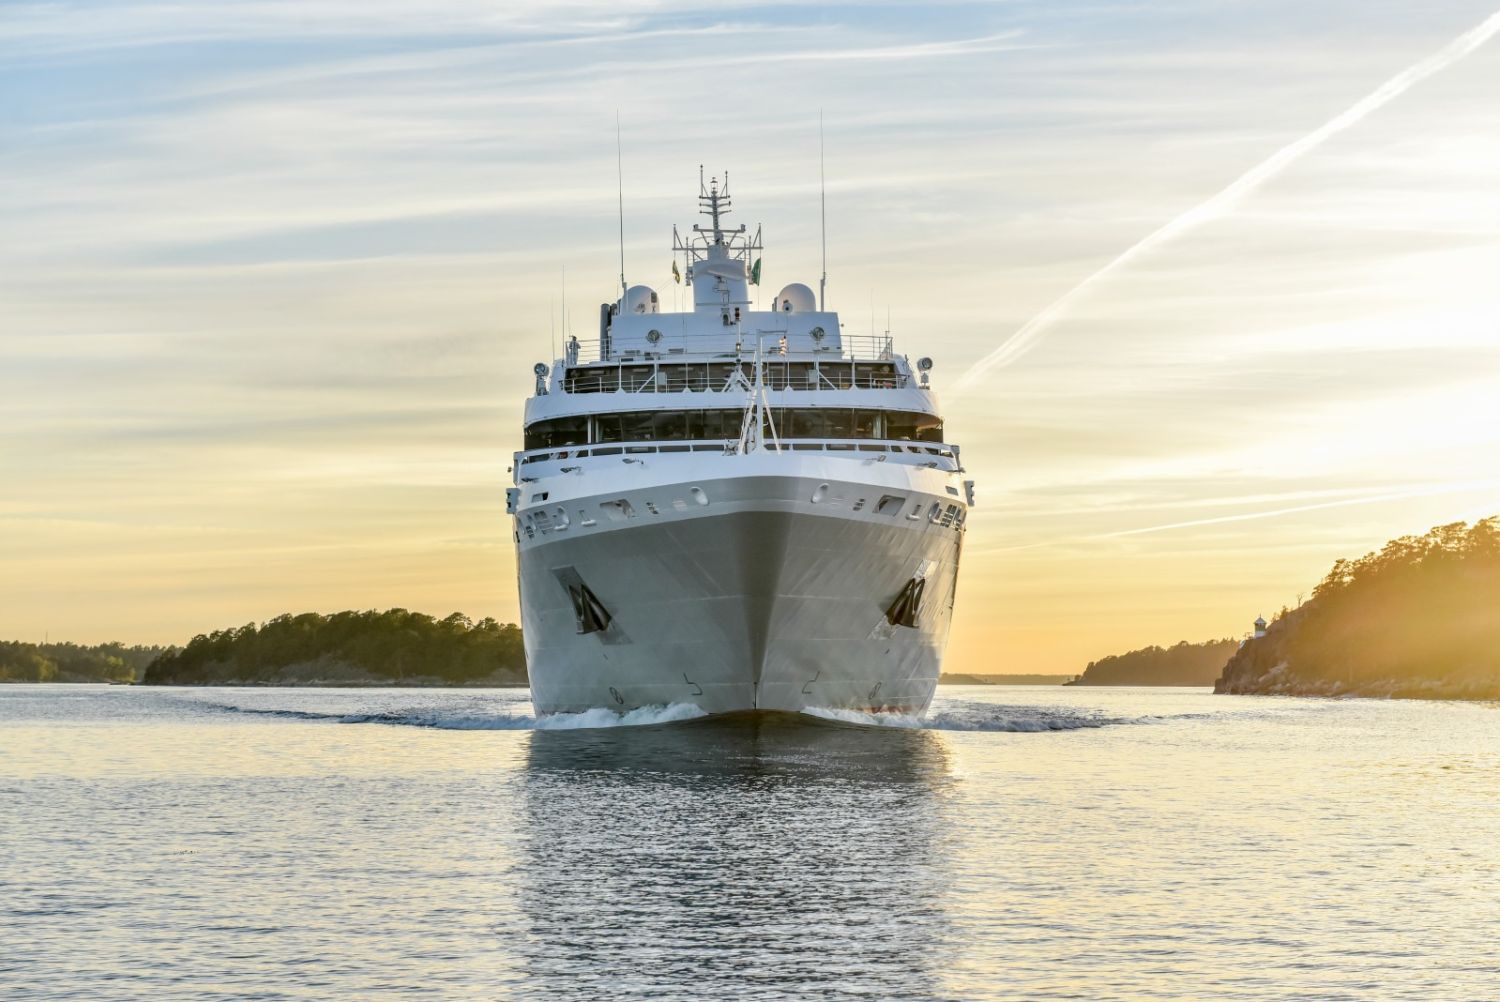 Le Soleal cruise boat Ponant cruises